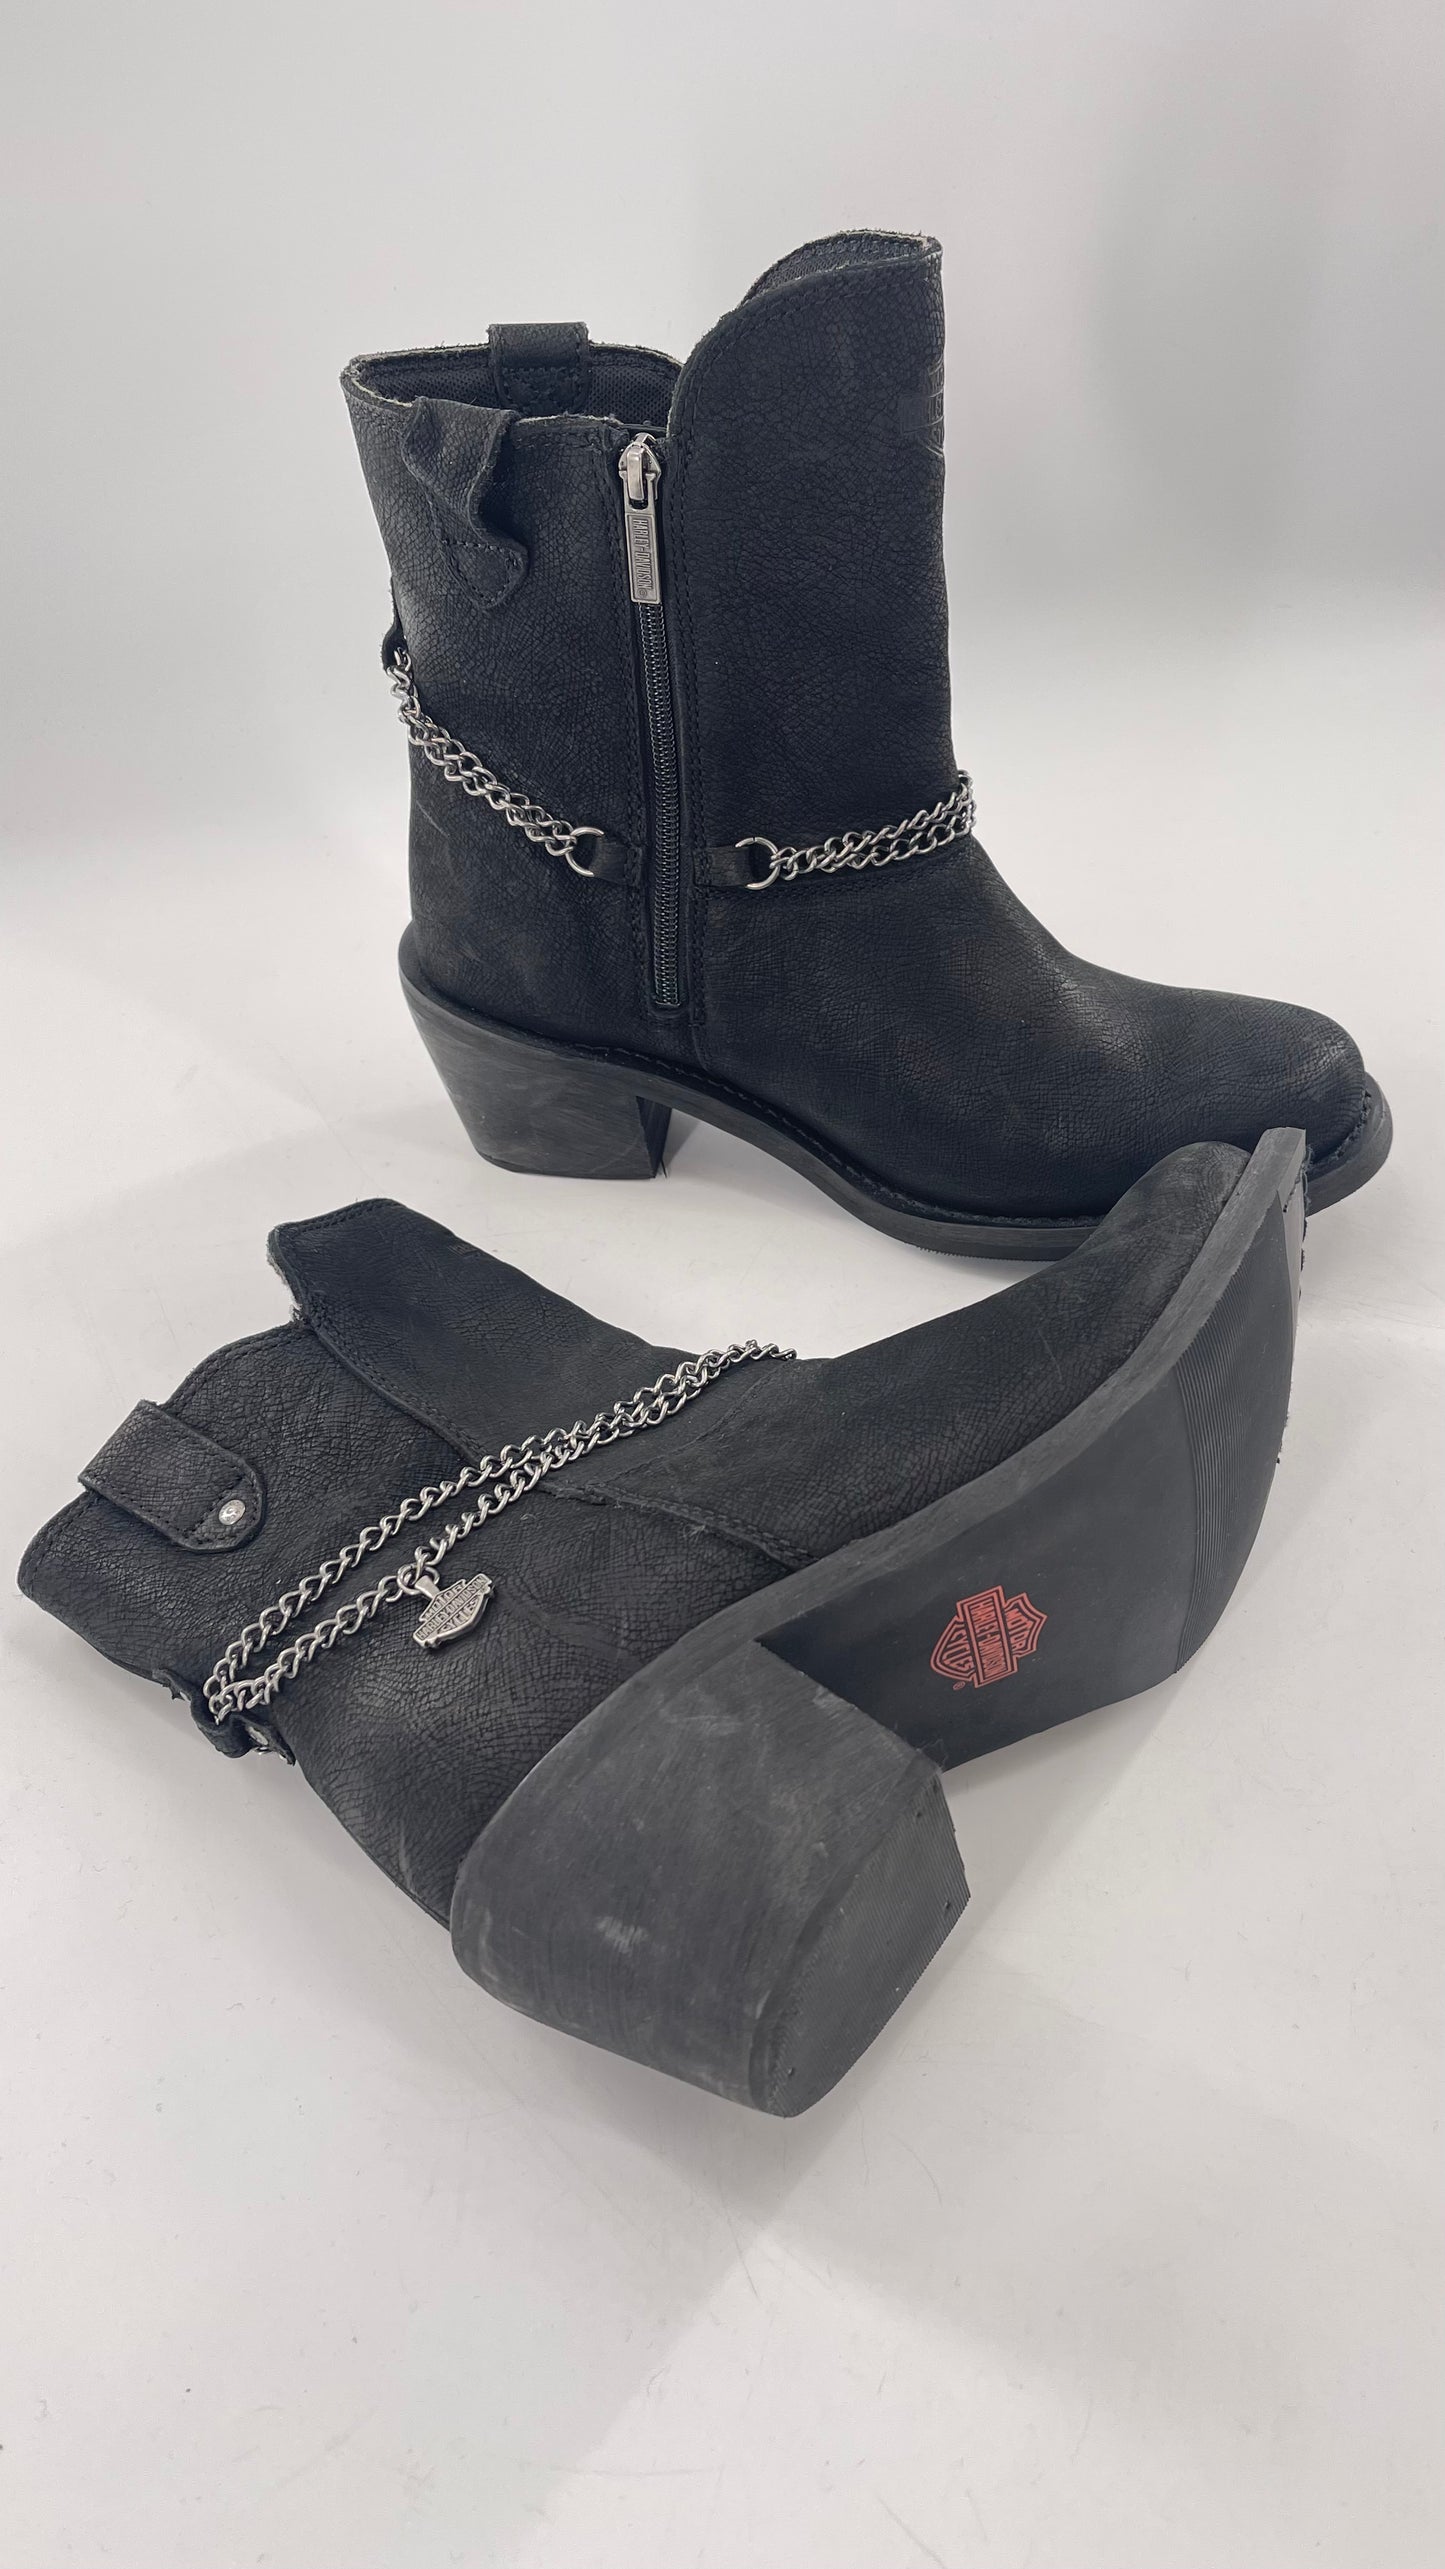 Harley Davidson Vanette Leather Boots (11M)